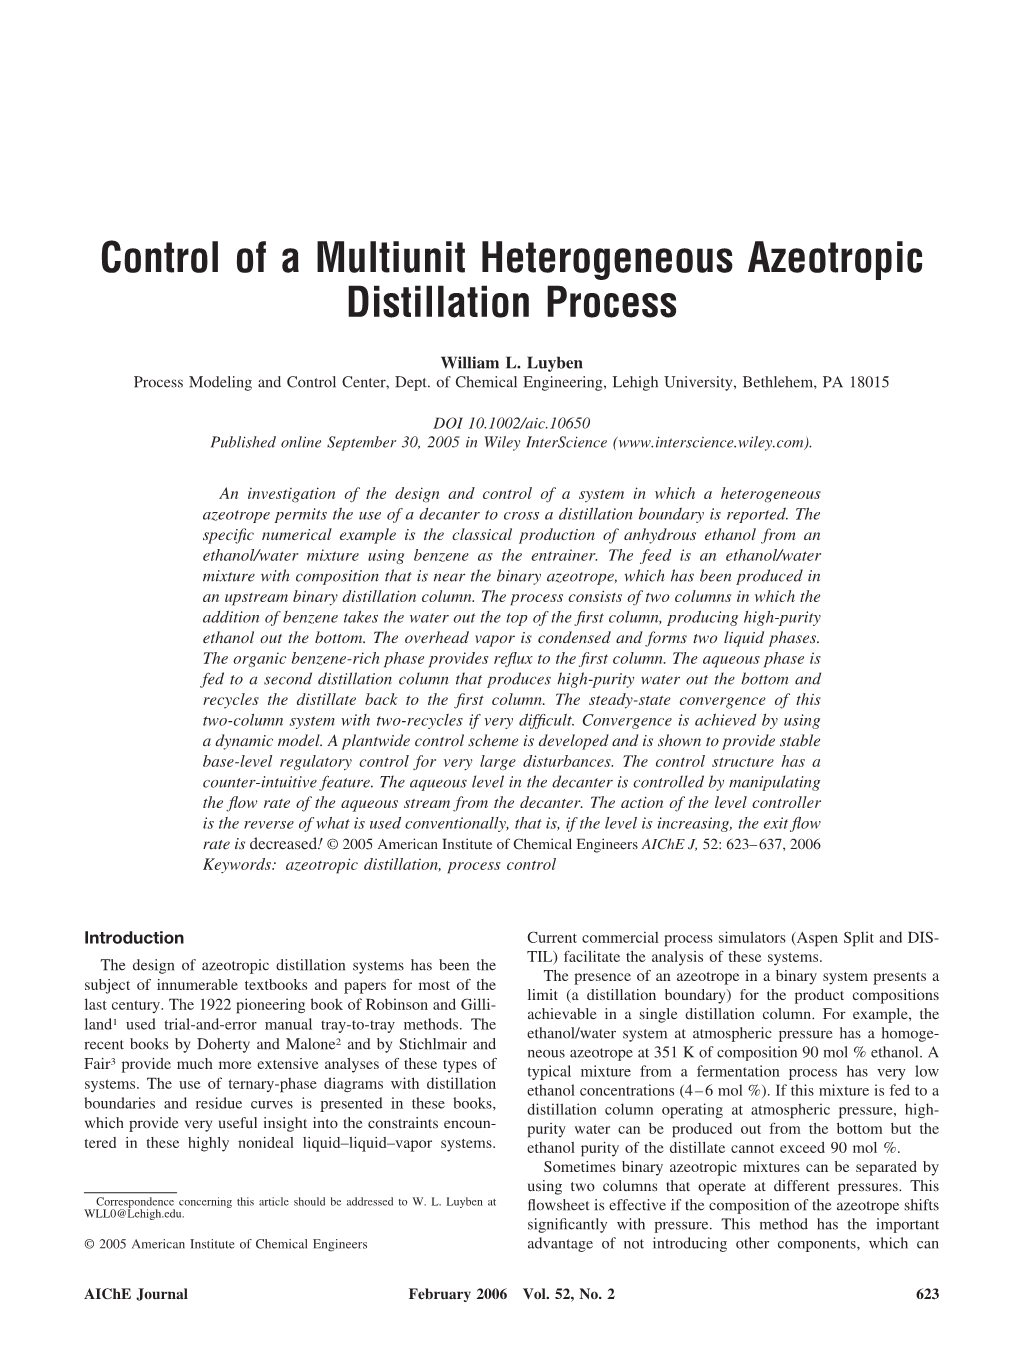 Control of a Multiunit Heterogeneous Azeotropic Distillation Process